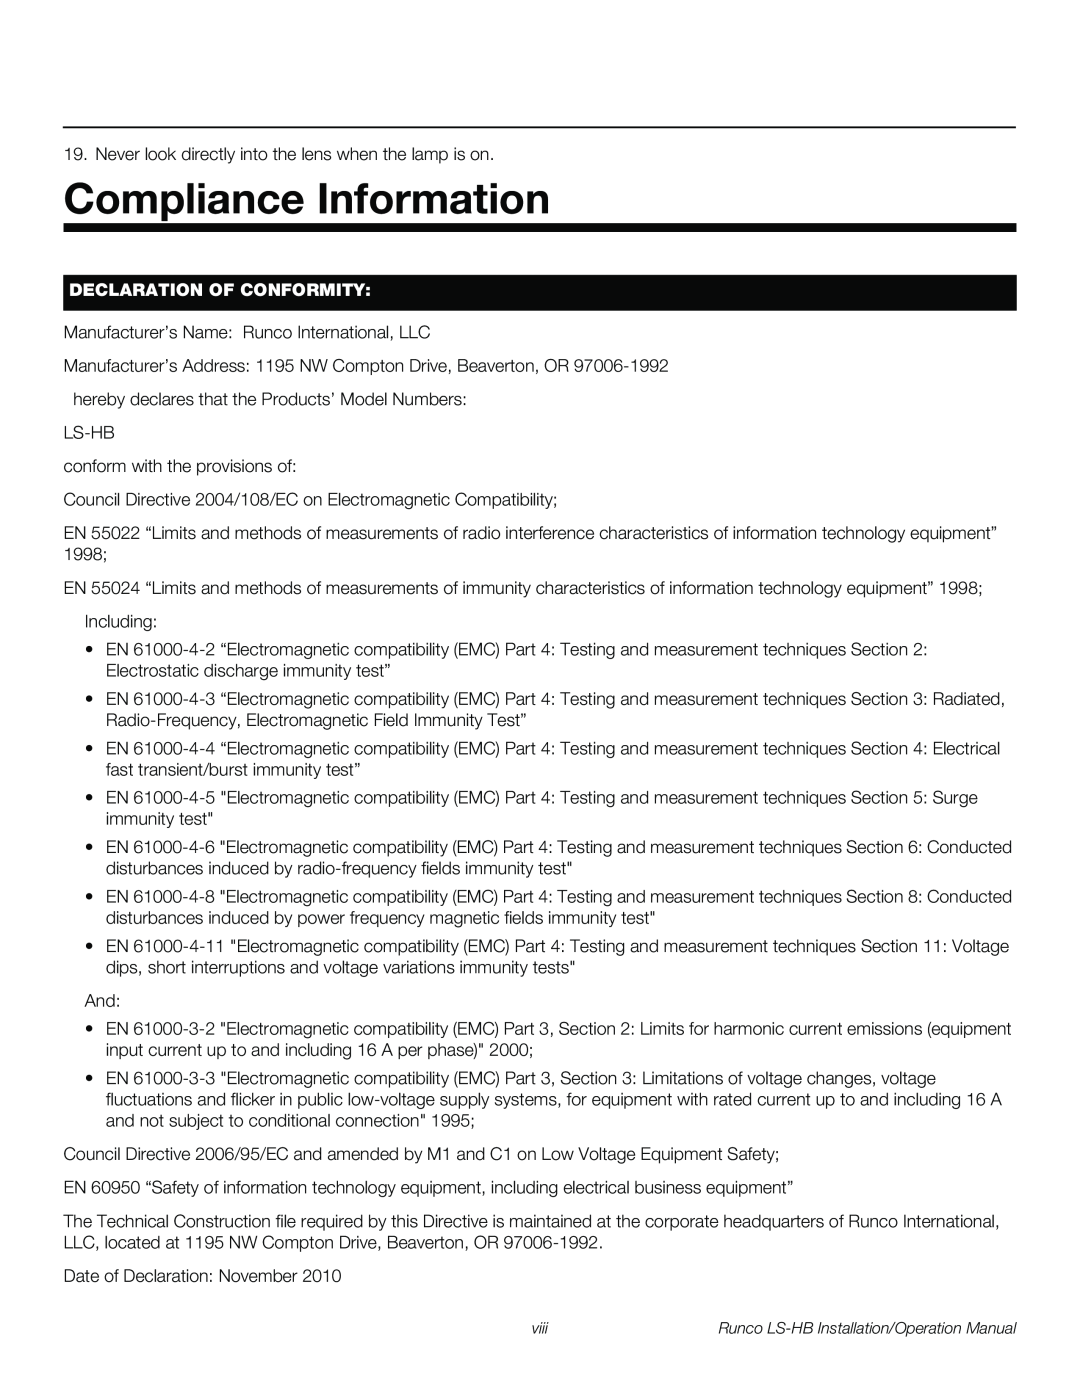 Runco LS-HB operation manual Compliance Information, Declaration Of Conformity 